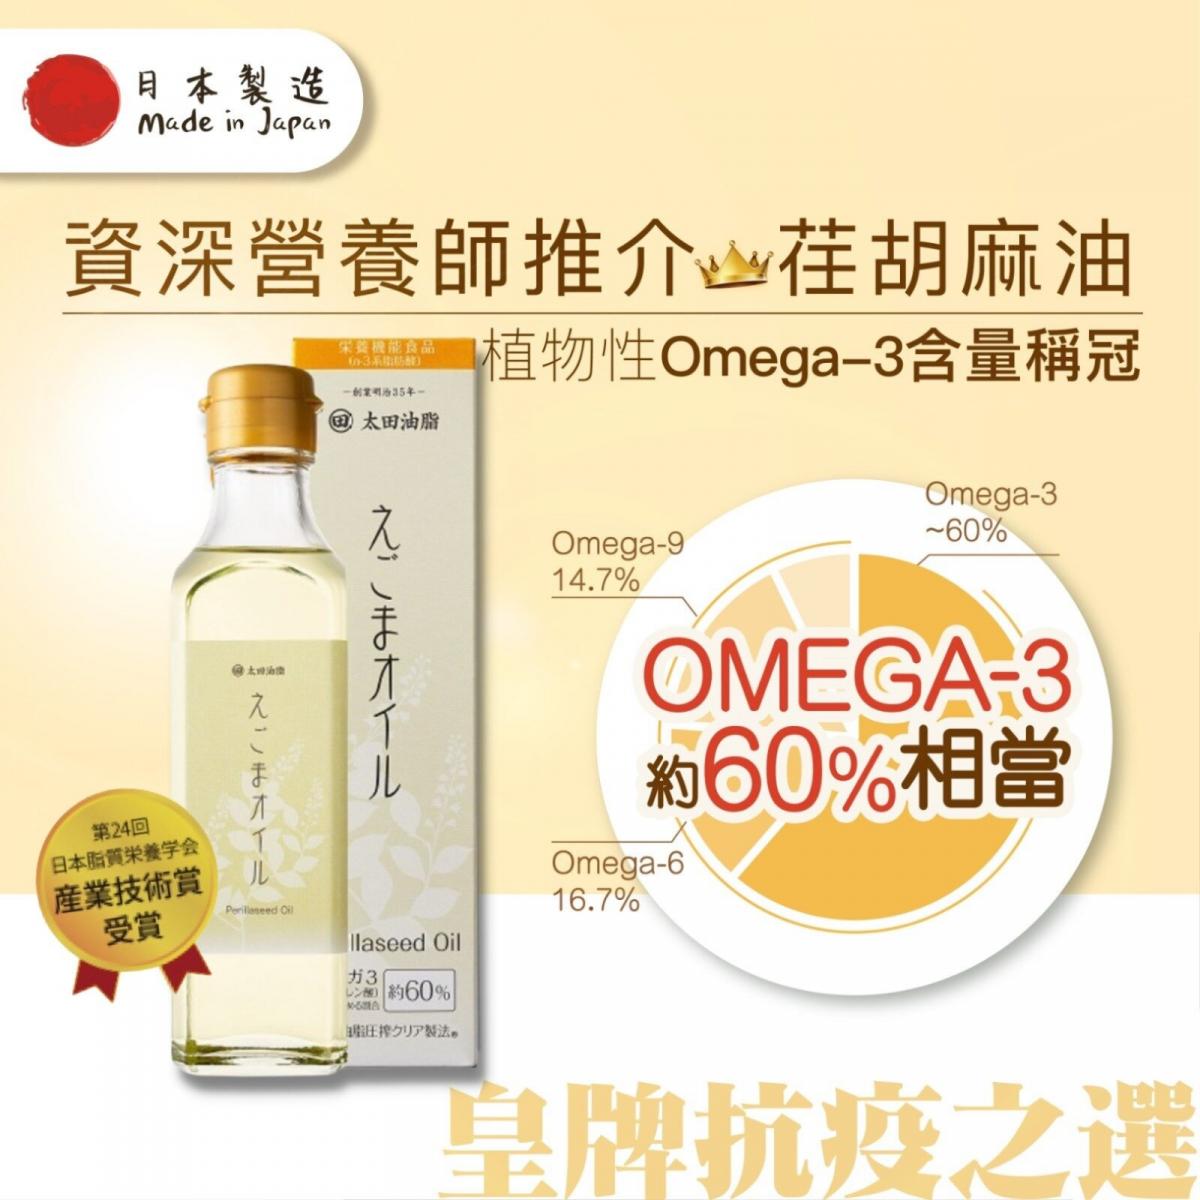 荏胡麻油 OMEGA 3  (家庭裝180g) -  賞味期限 : 19 SEP 2025